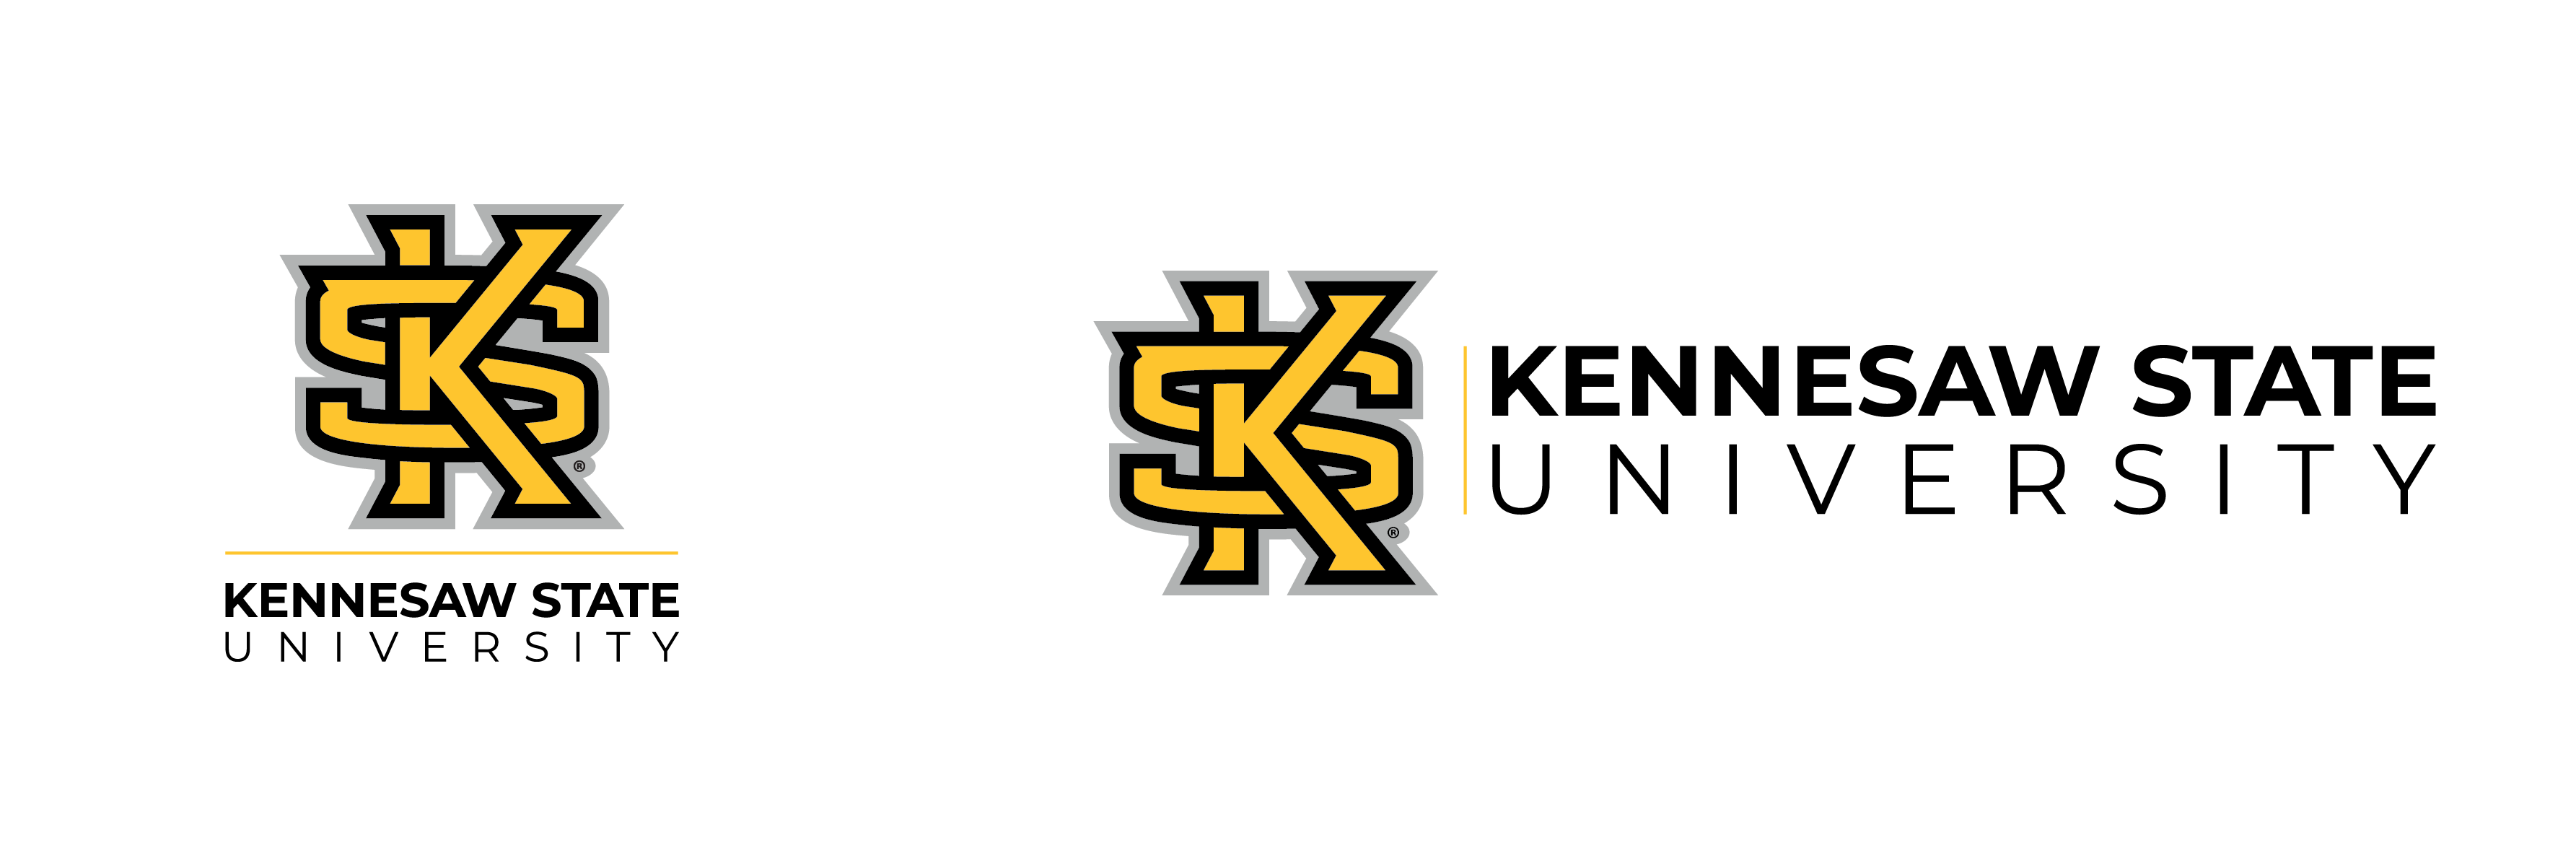 KSU master brand Logo